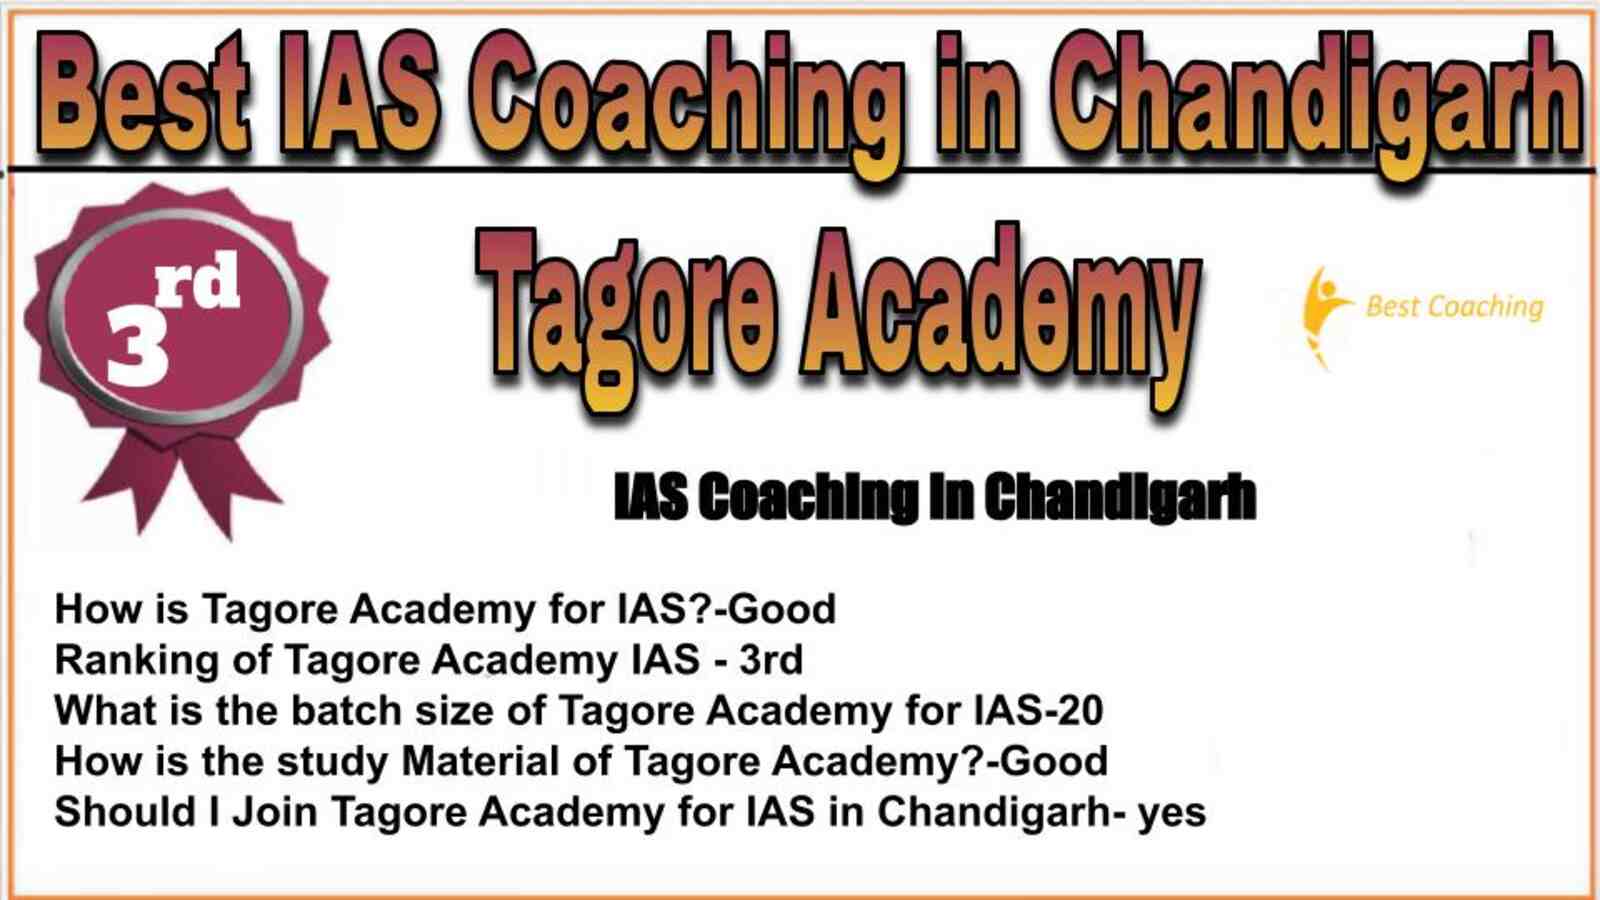 Rank 3 Best IAS Coaching in Chandigarh